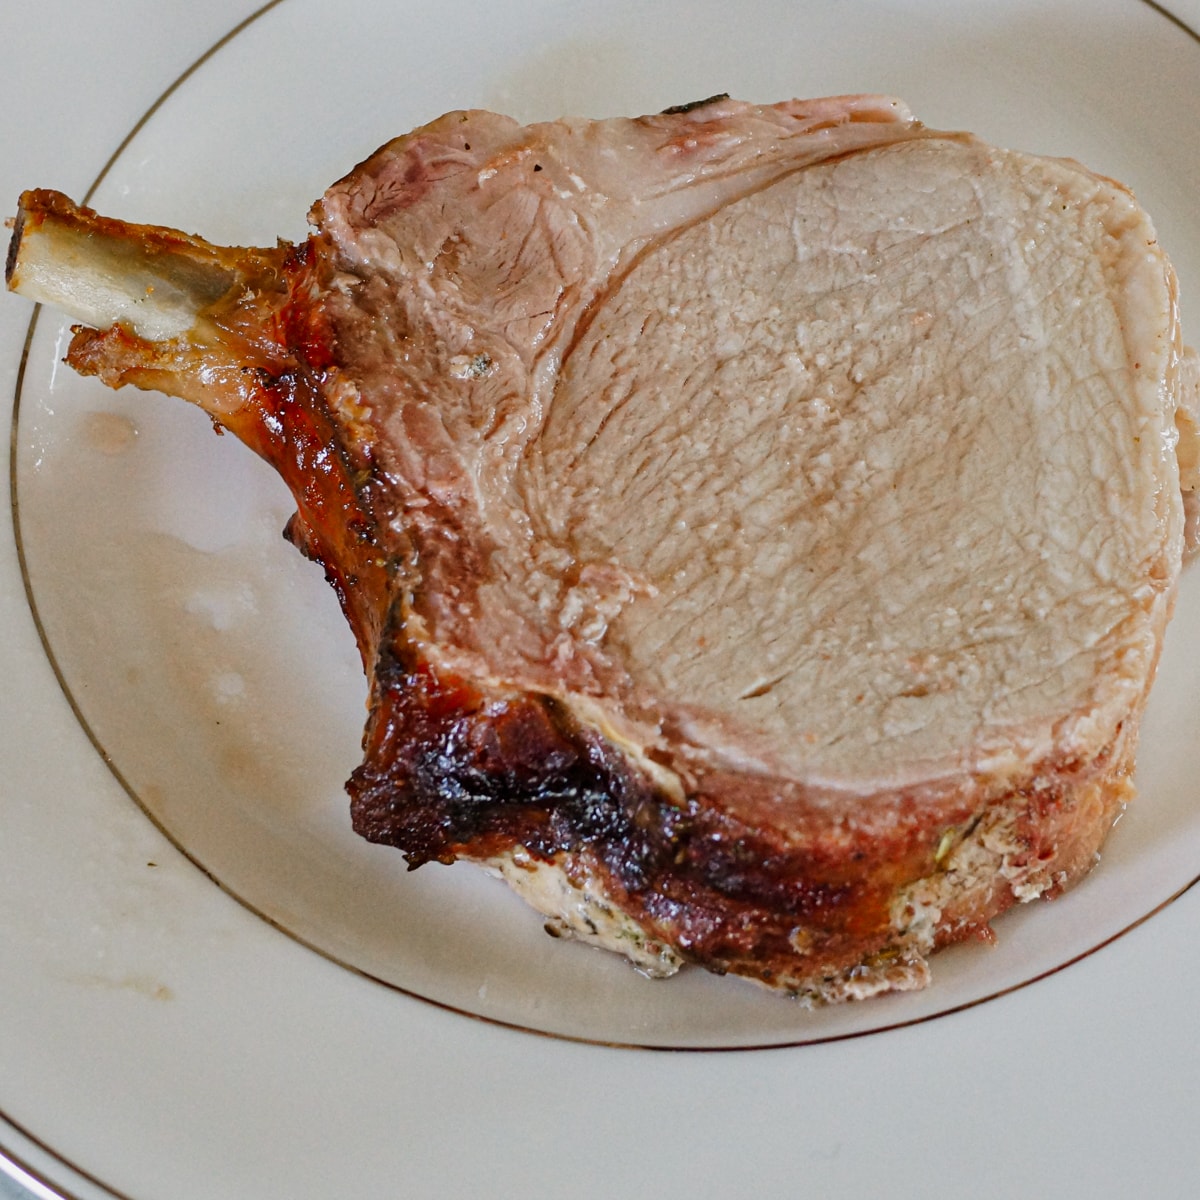 Smoked pork chop on a dinner plate.